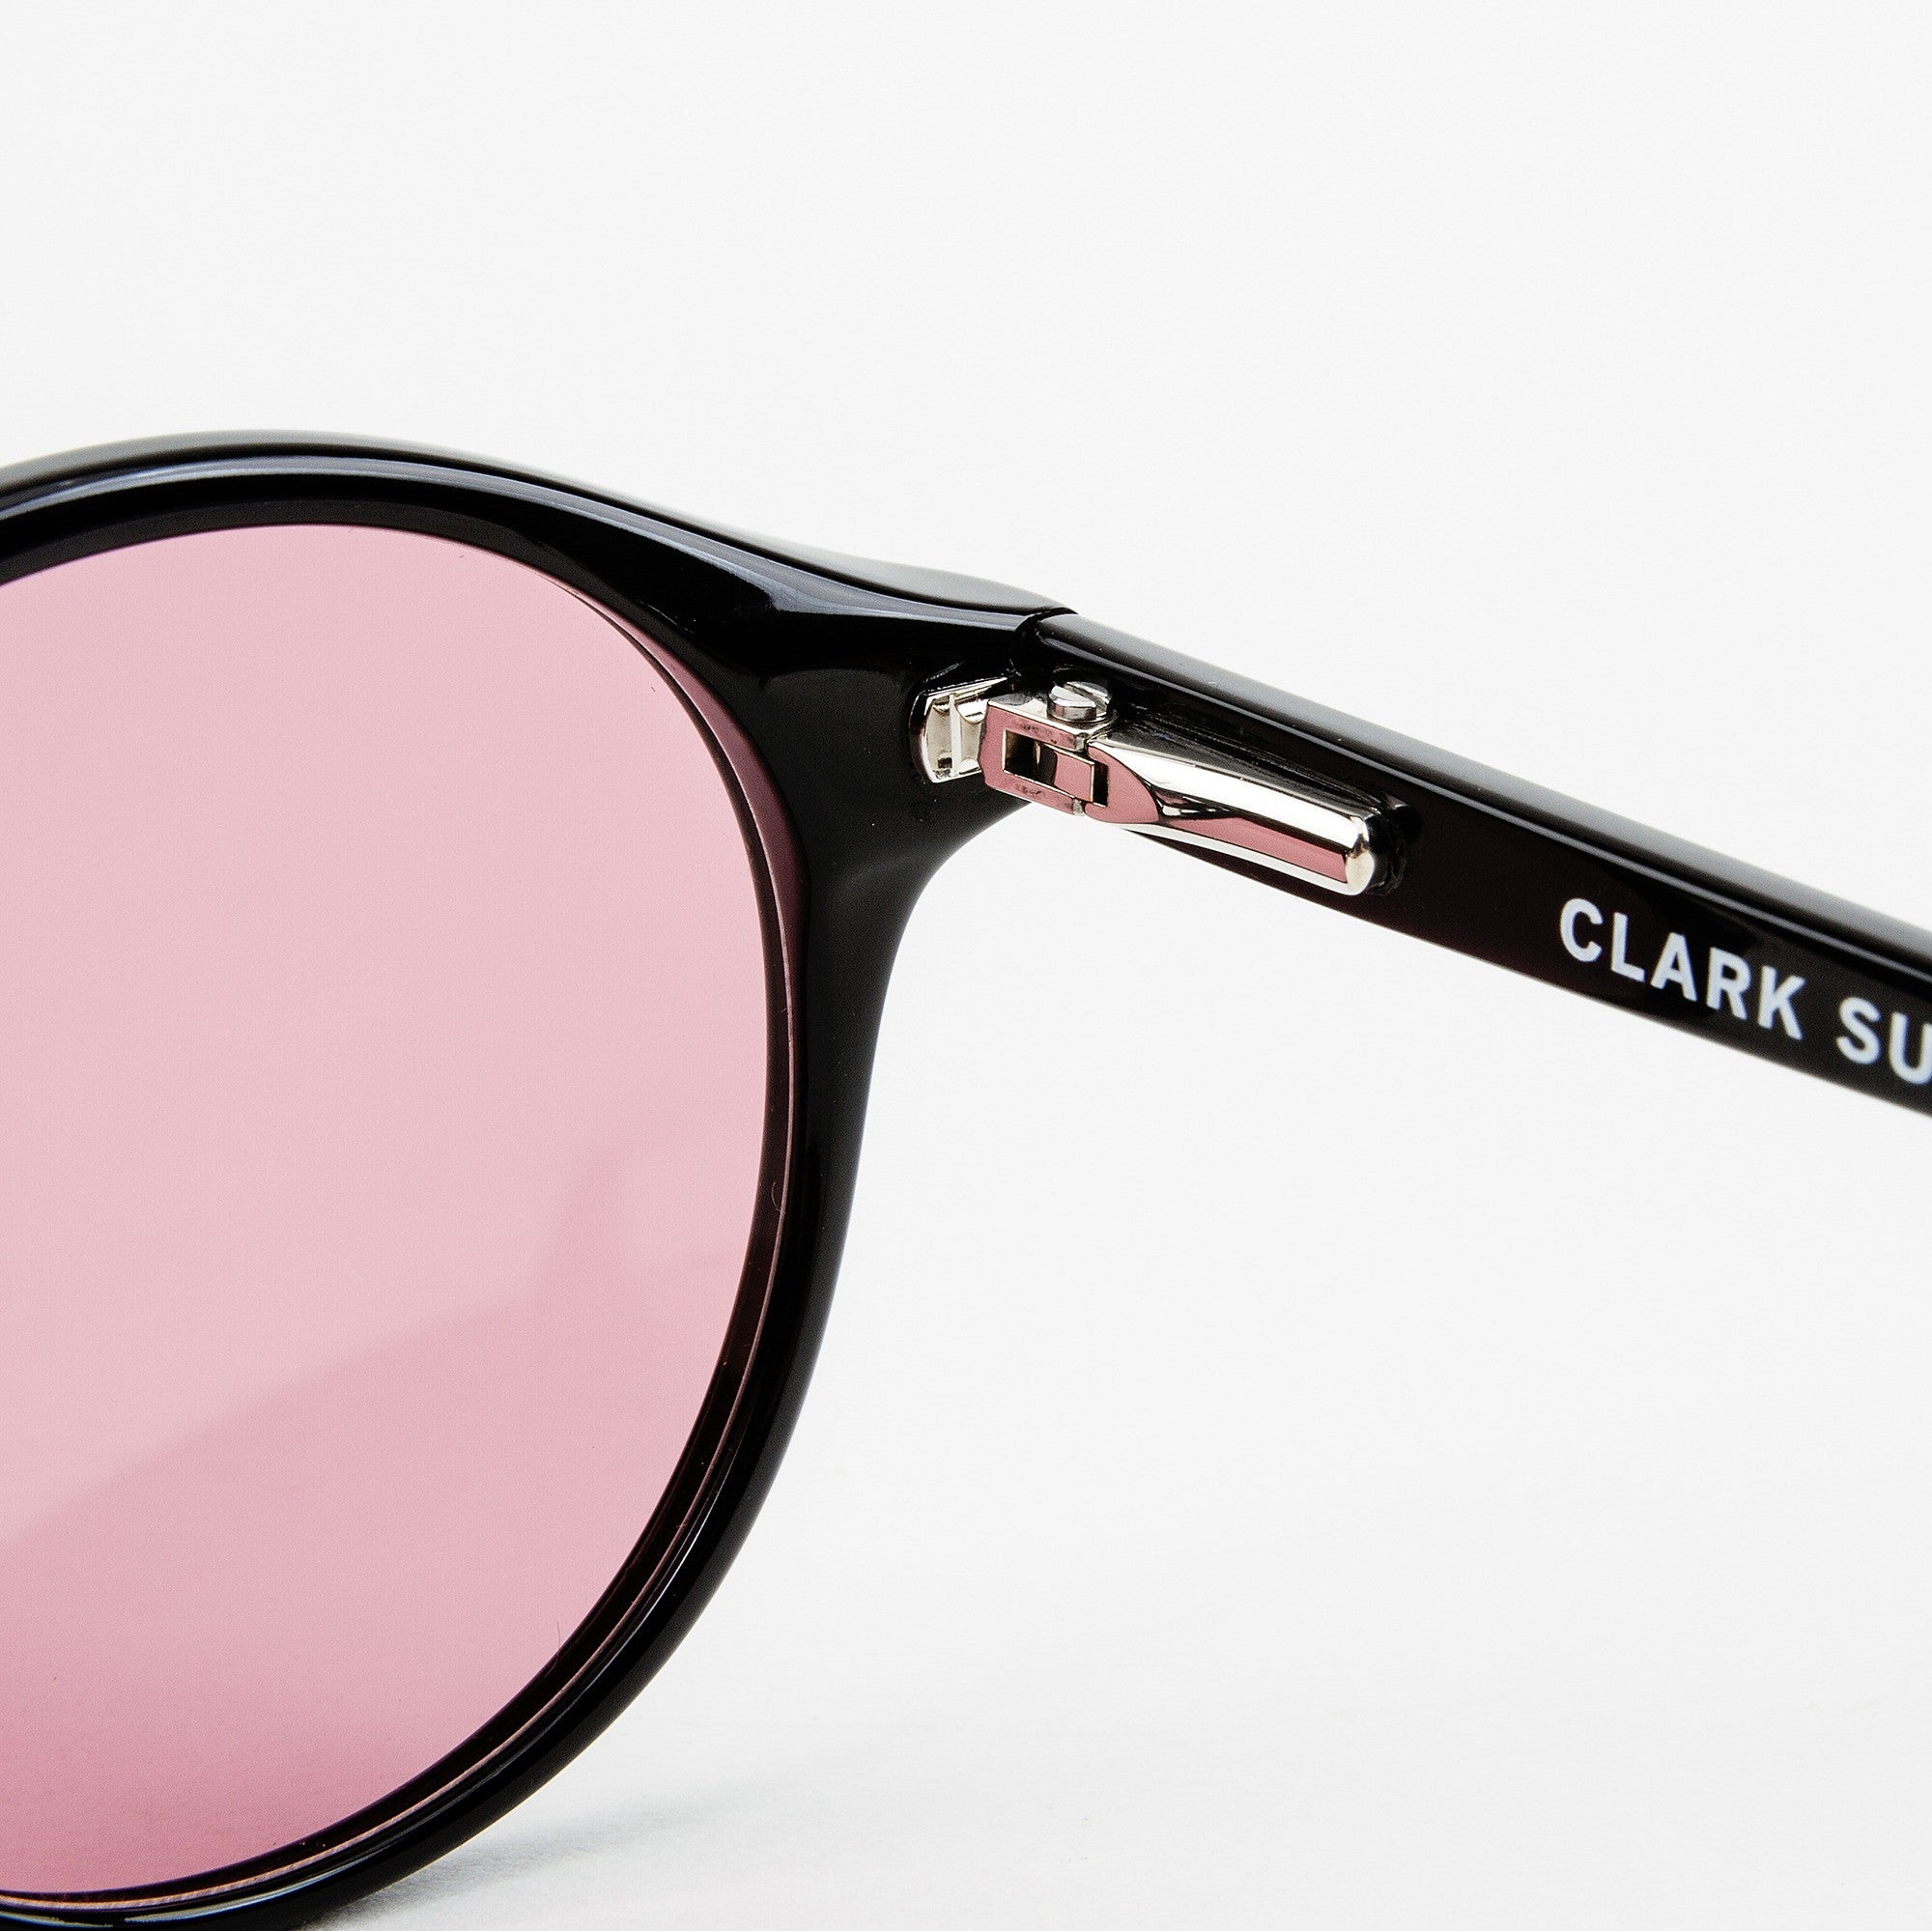 Clark Sun' Black Sunglasses